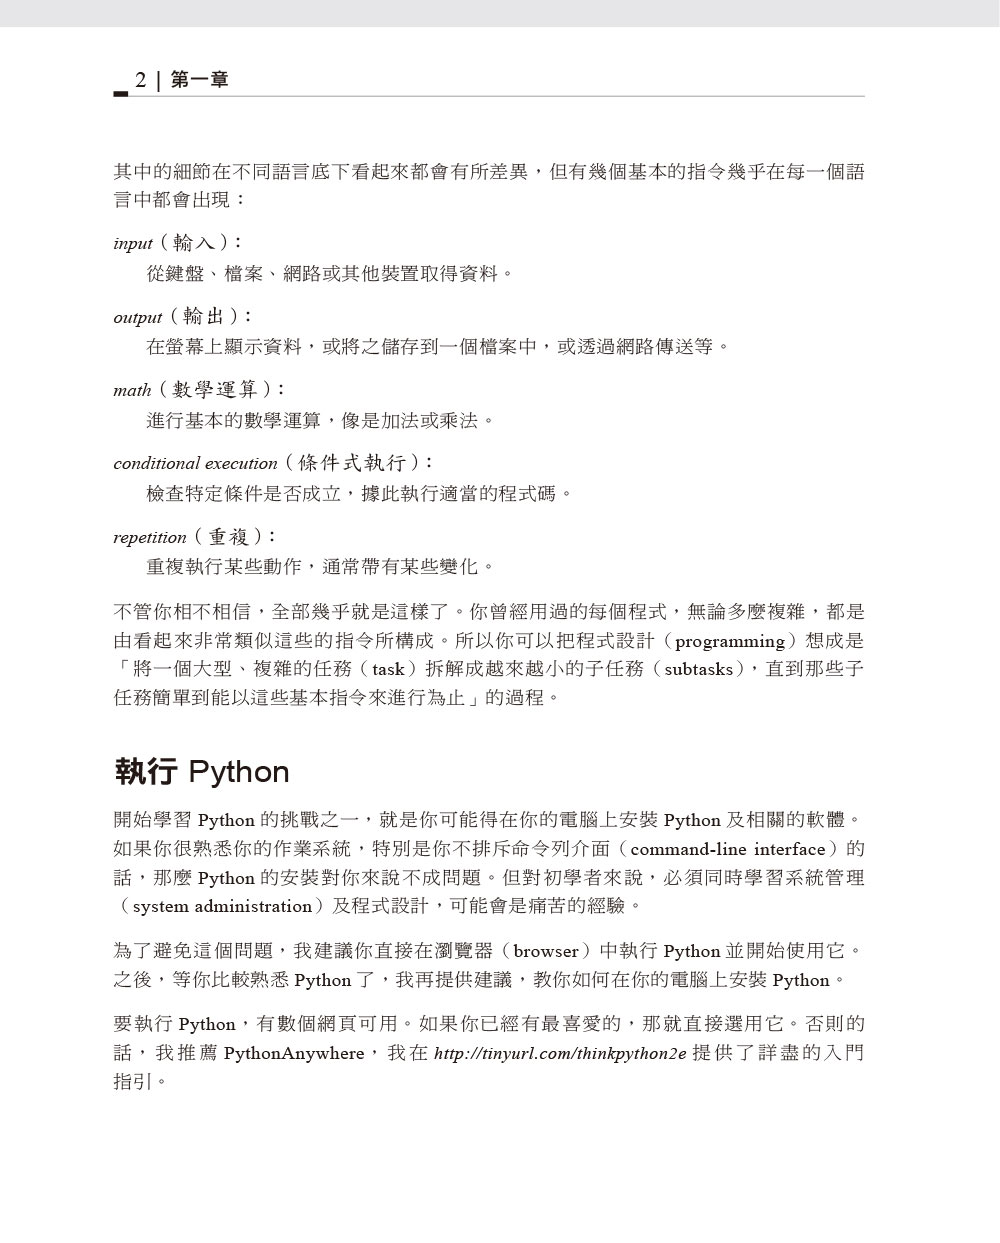 ►GO►最新優惠► 【書籍】Think Python：學習程式設計的思考概念 第二版